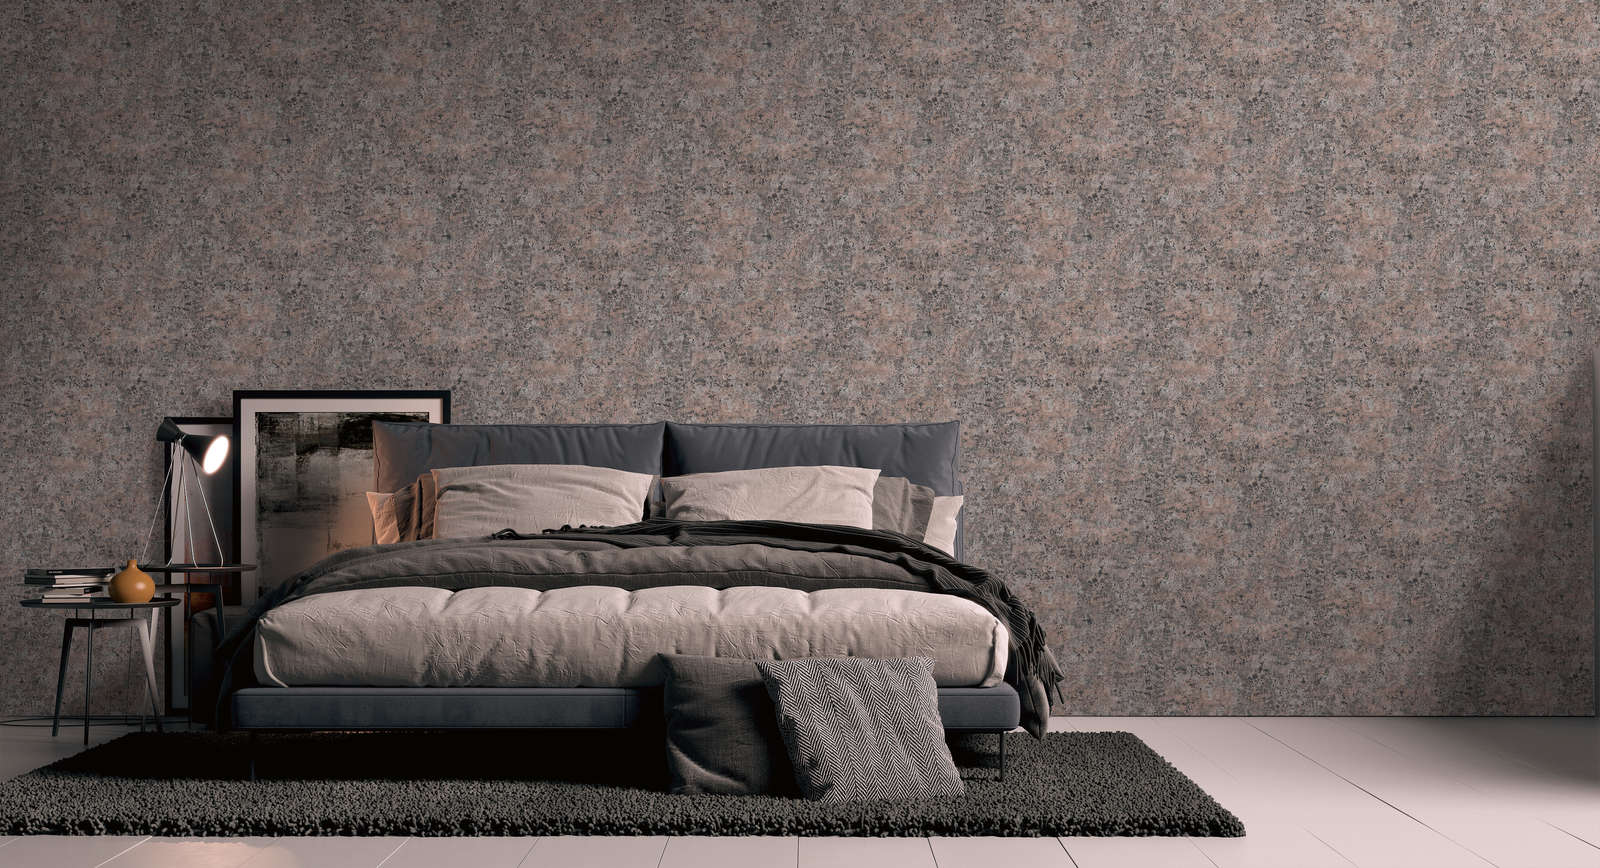             Metallic non-woven wallpaper in used look glossy - bronze, black, silver
        